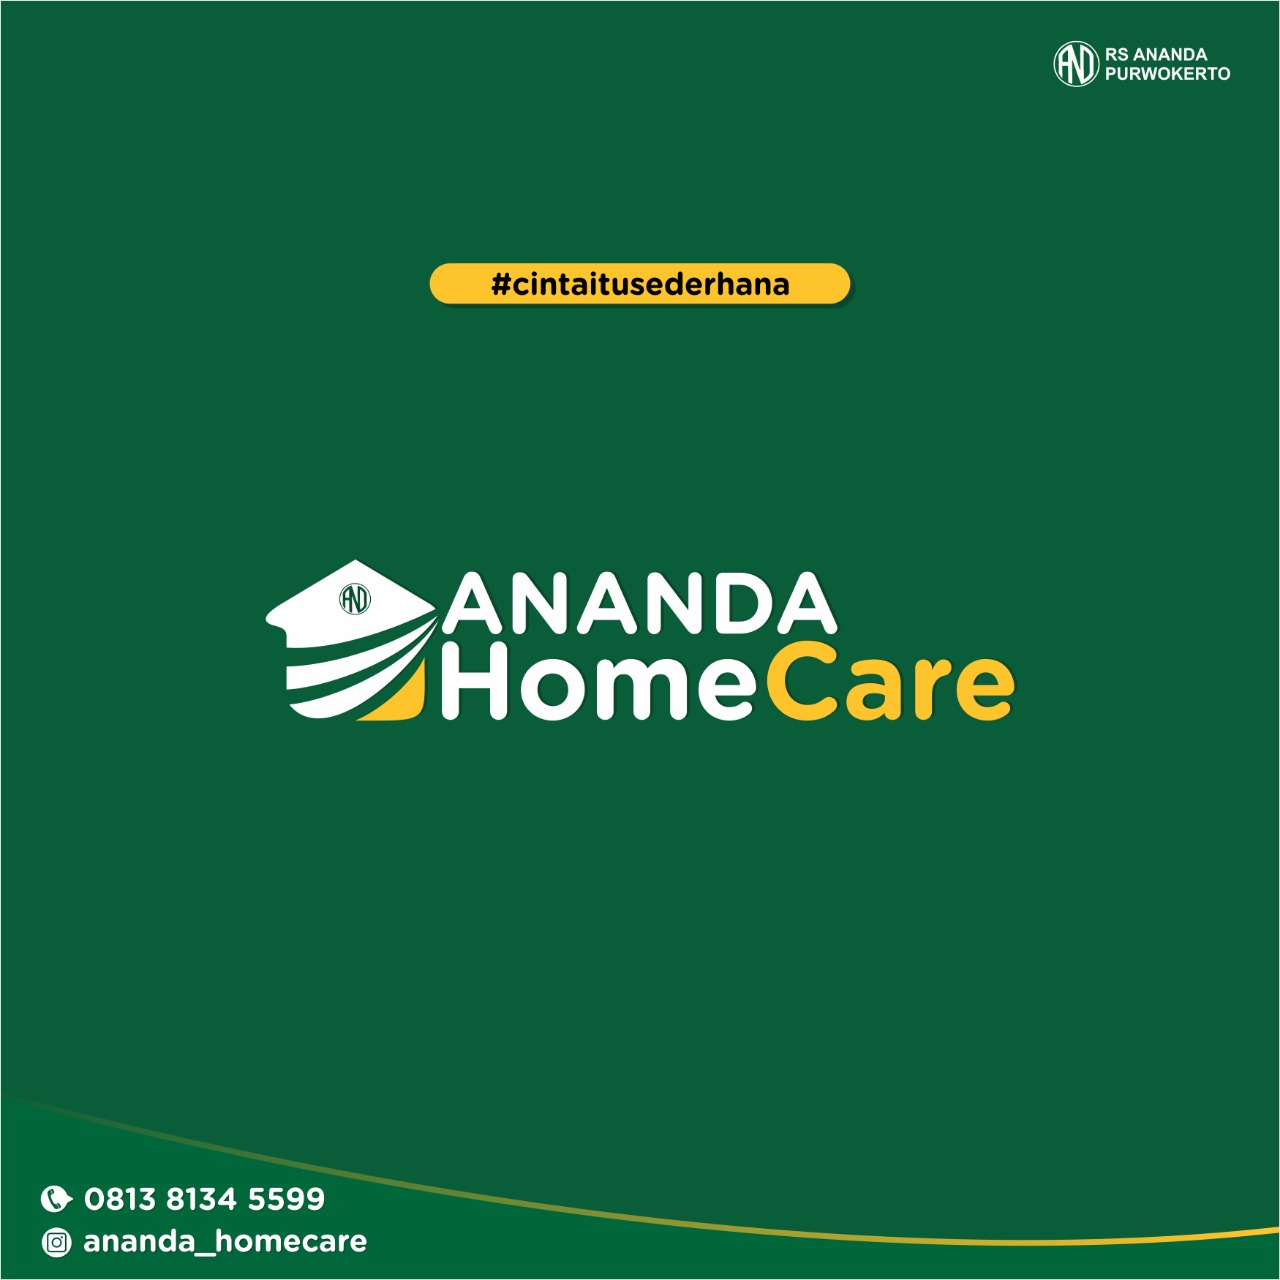 layanan home care - rs ananda purwokerto LAYANAN HOME CARE &#8211; RS ANANDA PURWOKERTO WhatsApp Image 2019 08 15 at 21